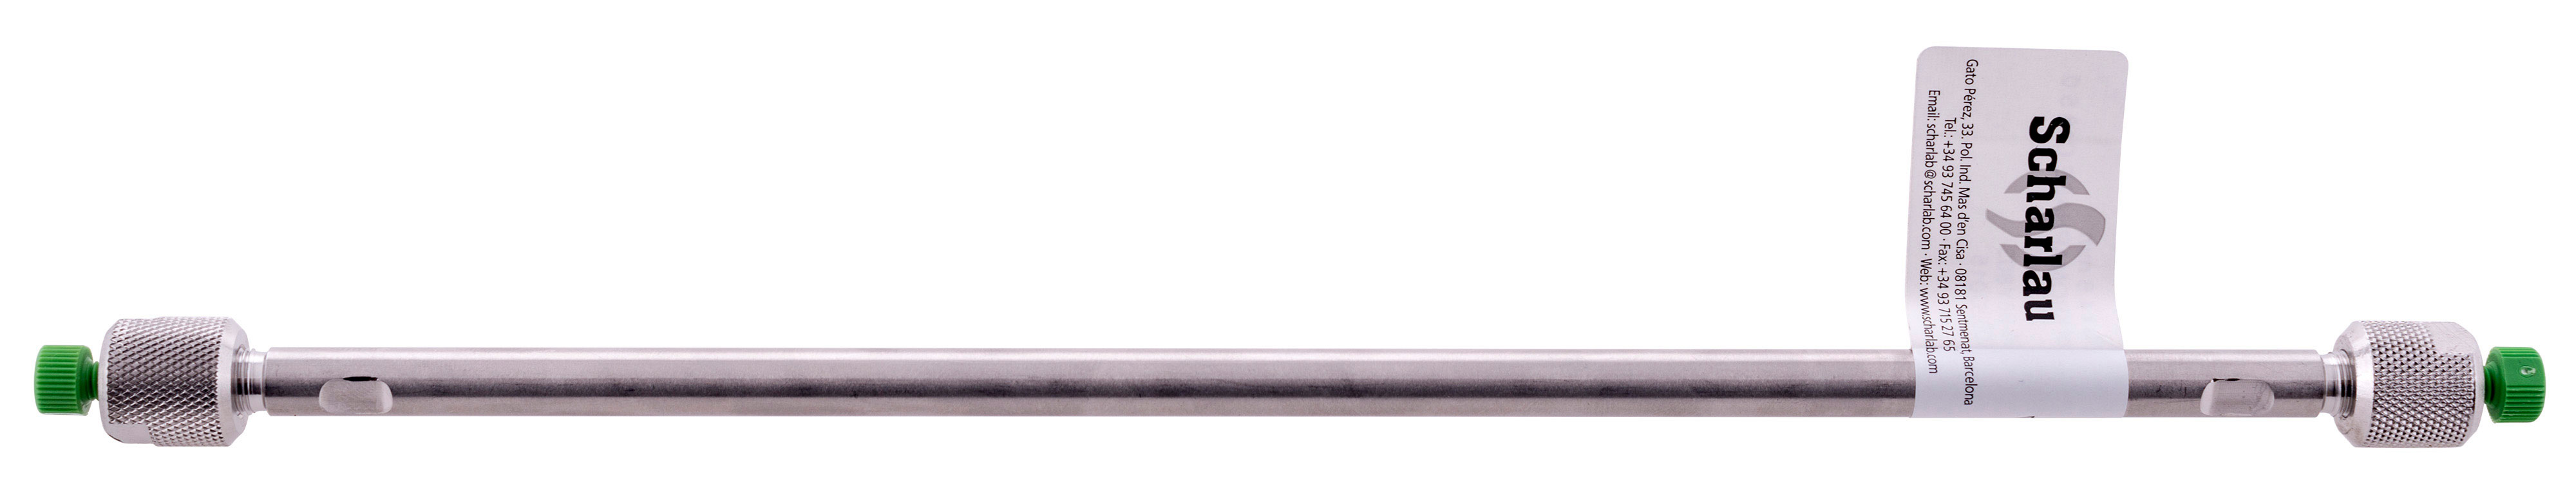 Columna KromaPhase 4,6mm D.I. SCHARLAU. Fase: SIL. Tamaño de particula (µm): 3,5. Tamaño de poro (Å): 100. Longitud (mm): 100. Diámetro interno (mm): 4,6